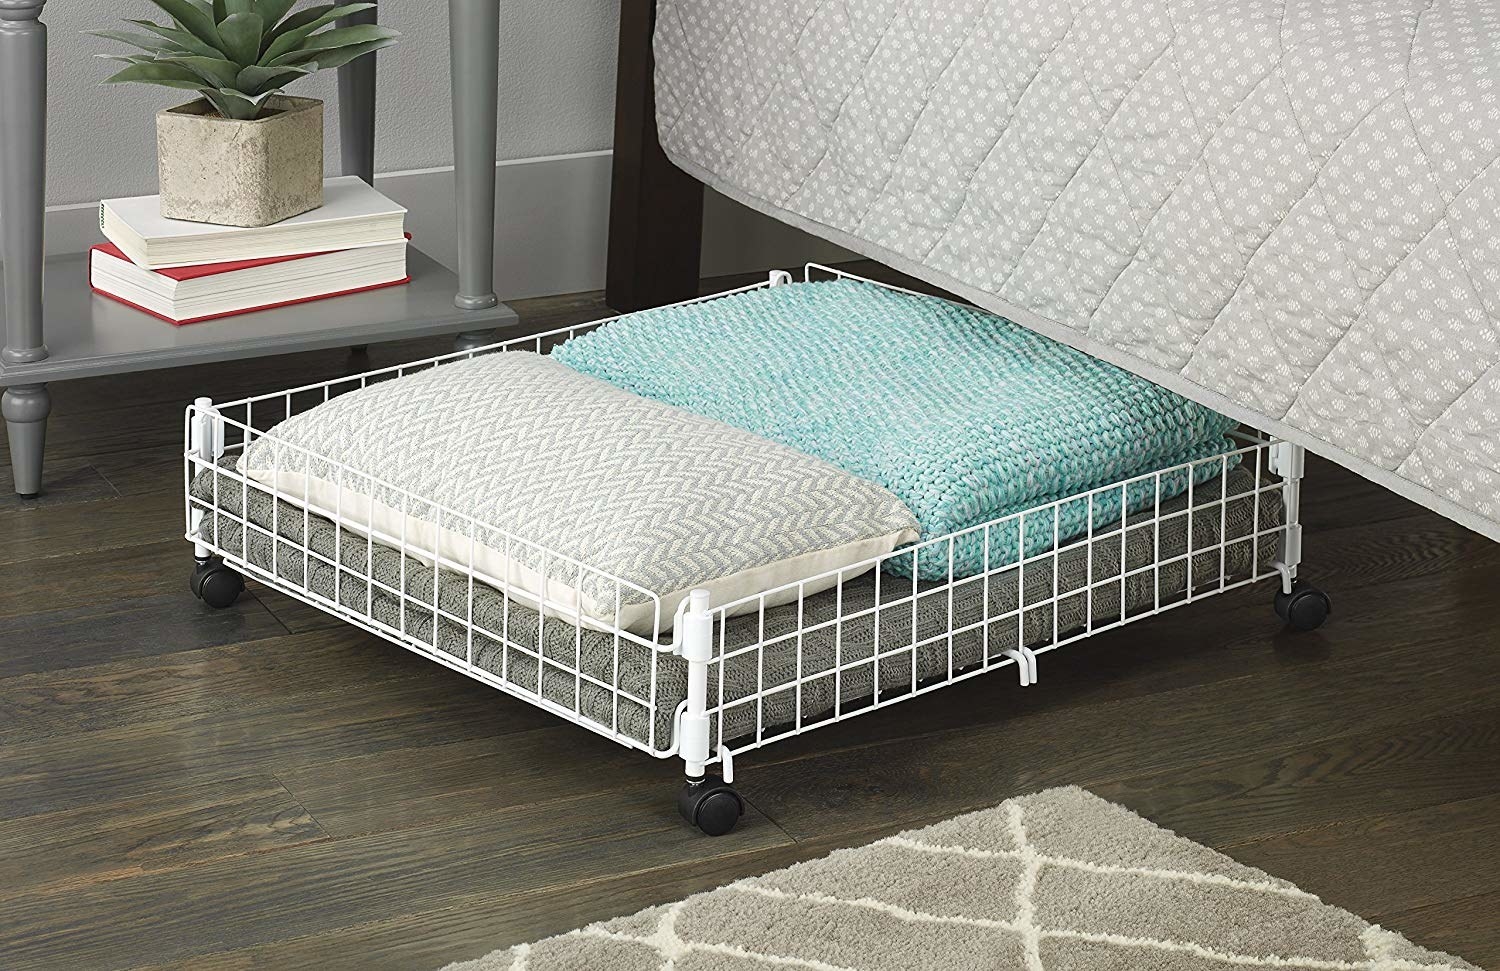 rolling basket holding blankets for storing under the bed